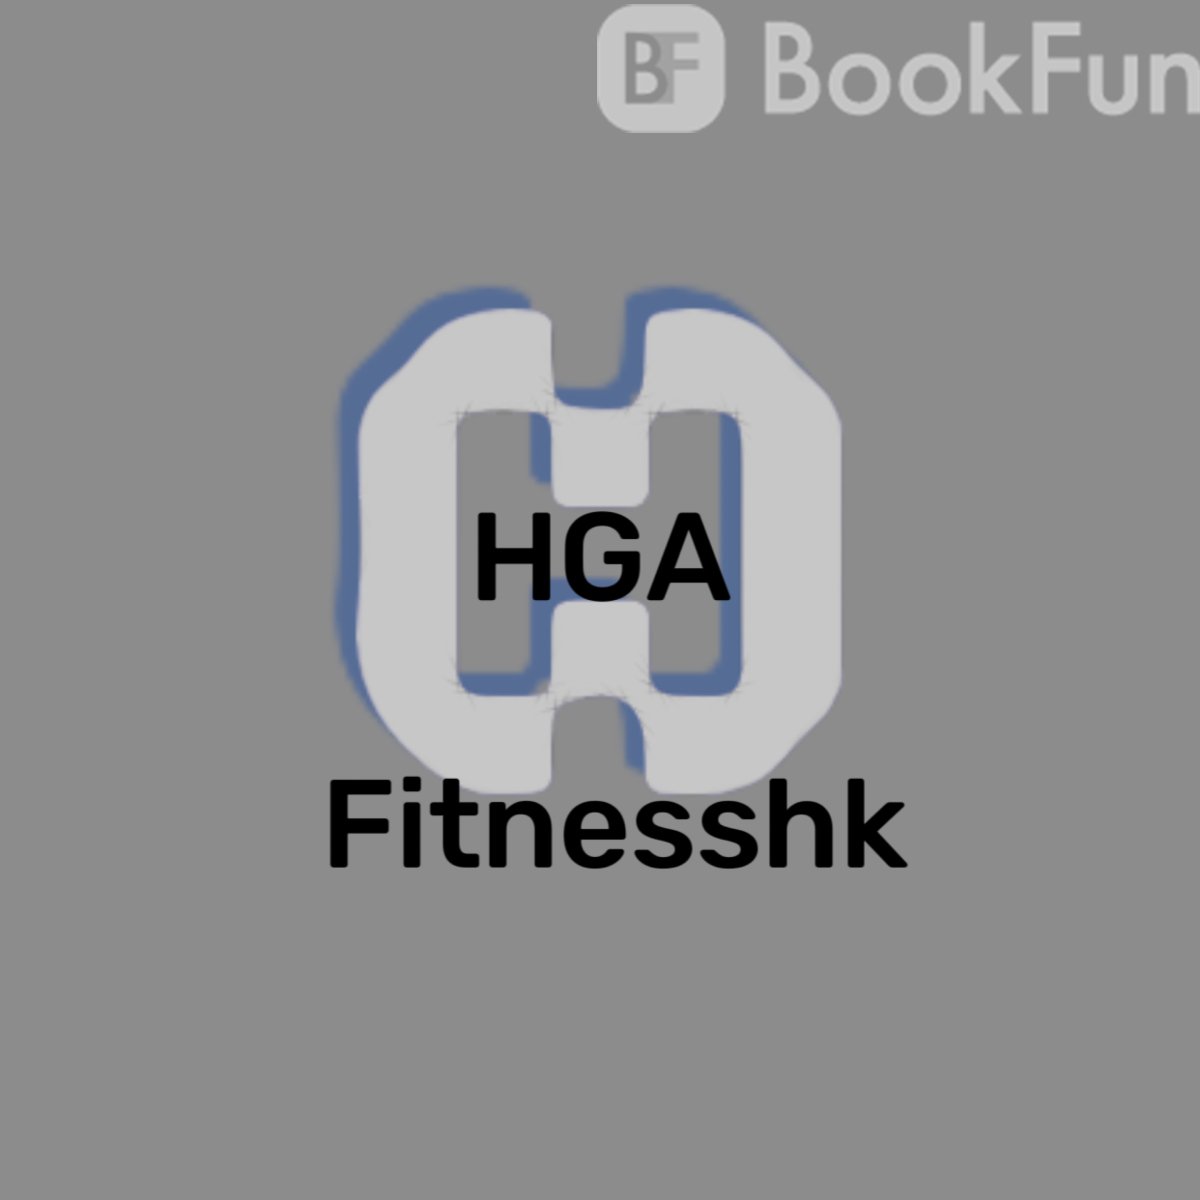 HGA Fitnesshk